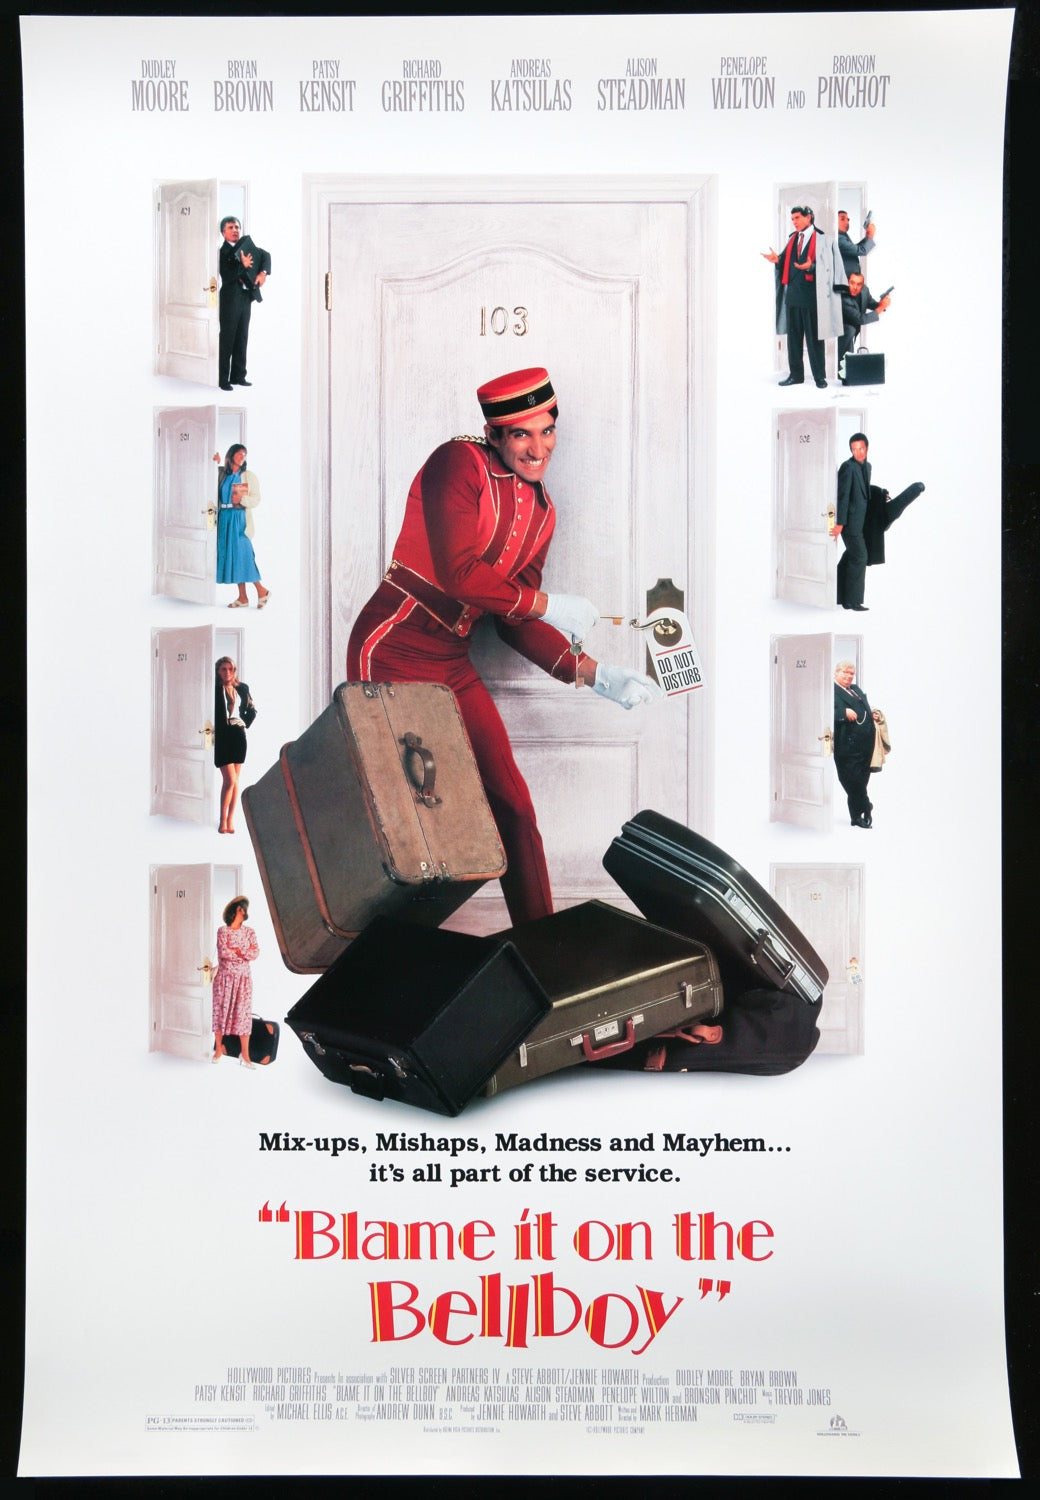 Blame it on the Bellboy (1992) original movie poster for sale at Original Film Art